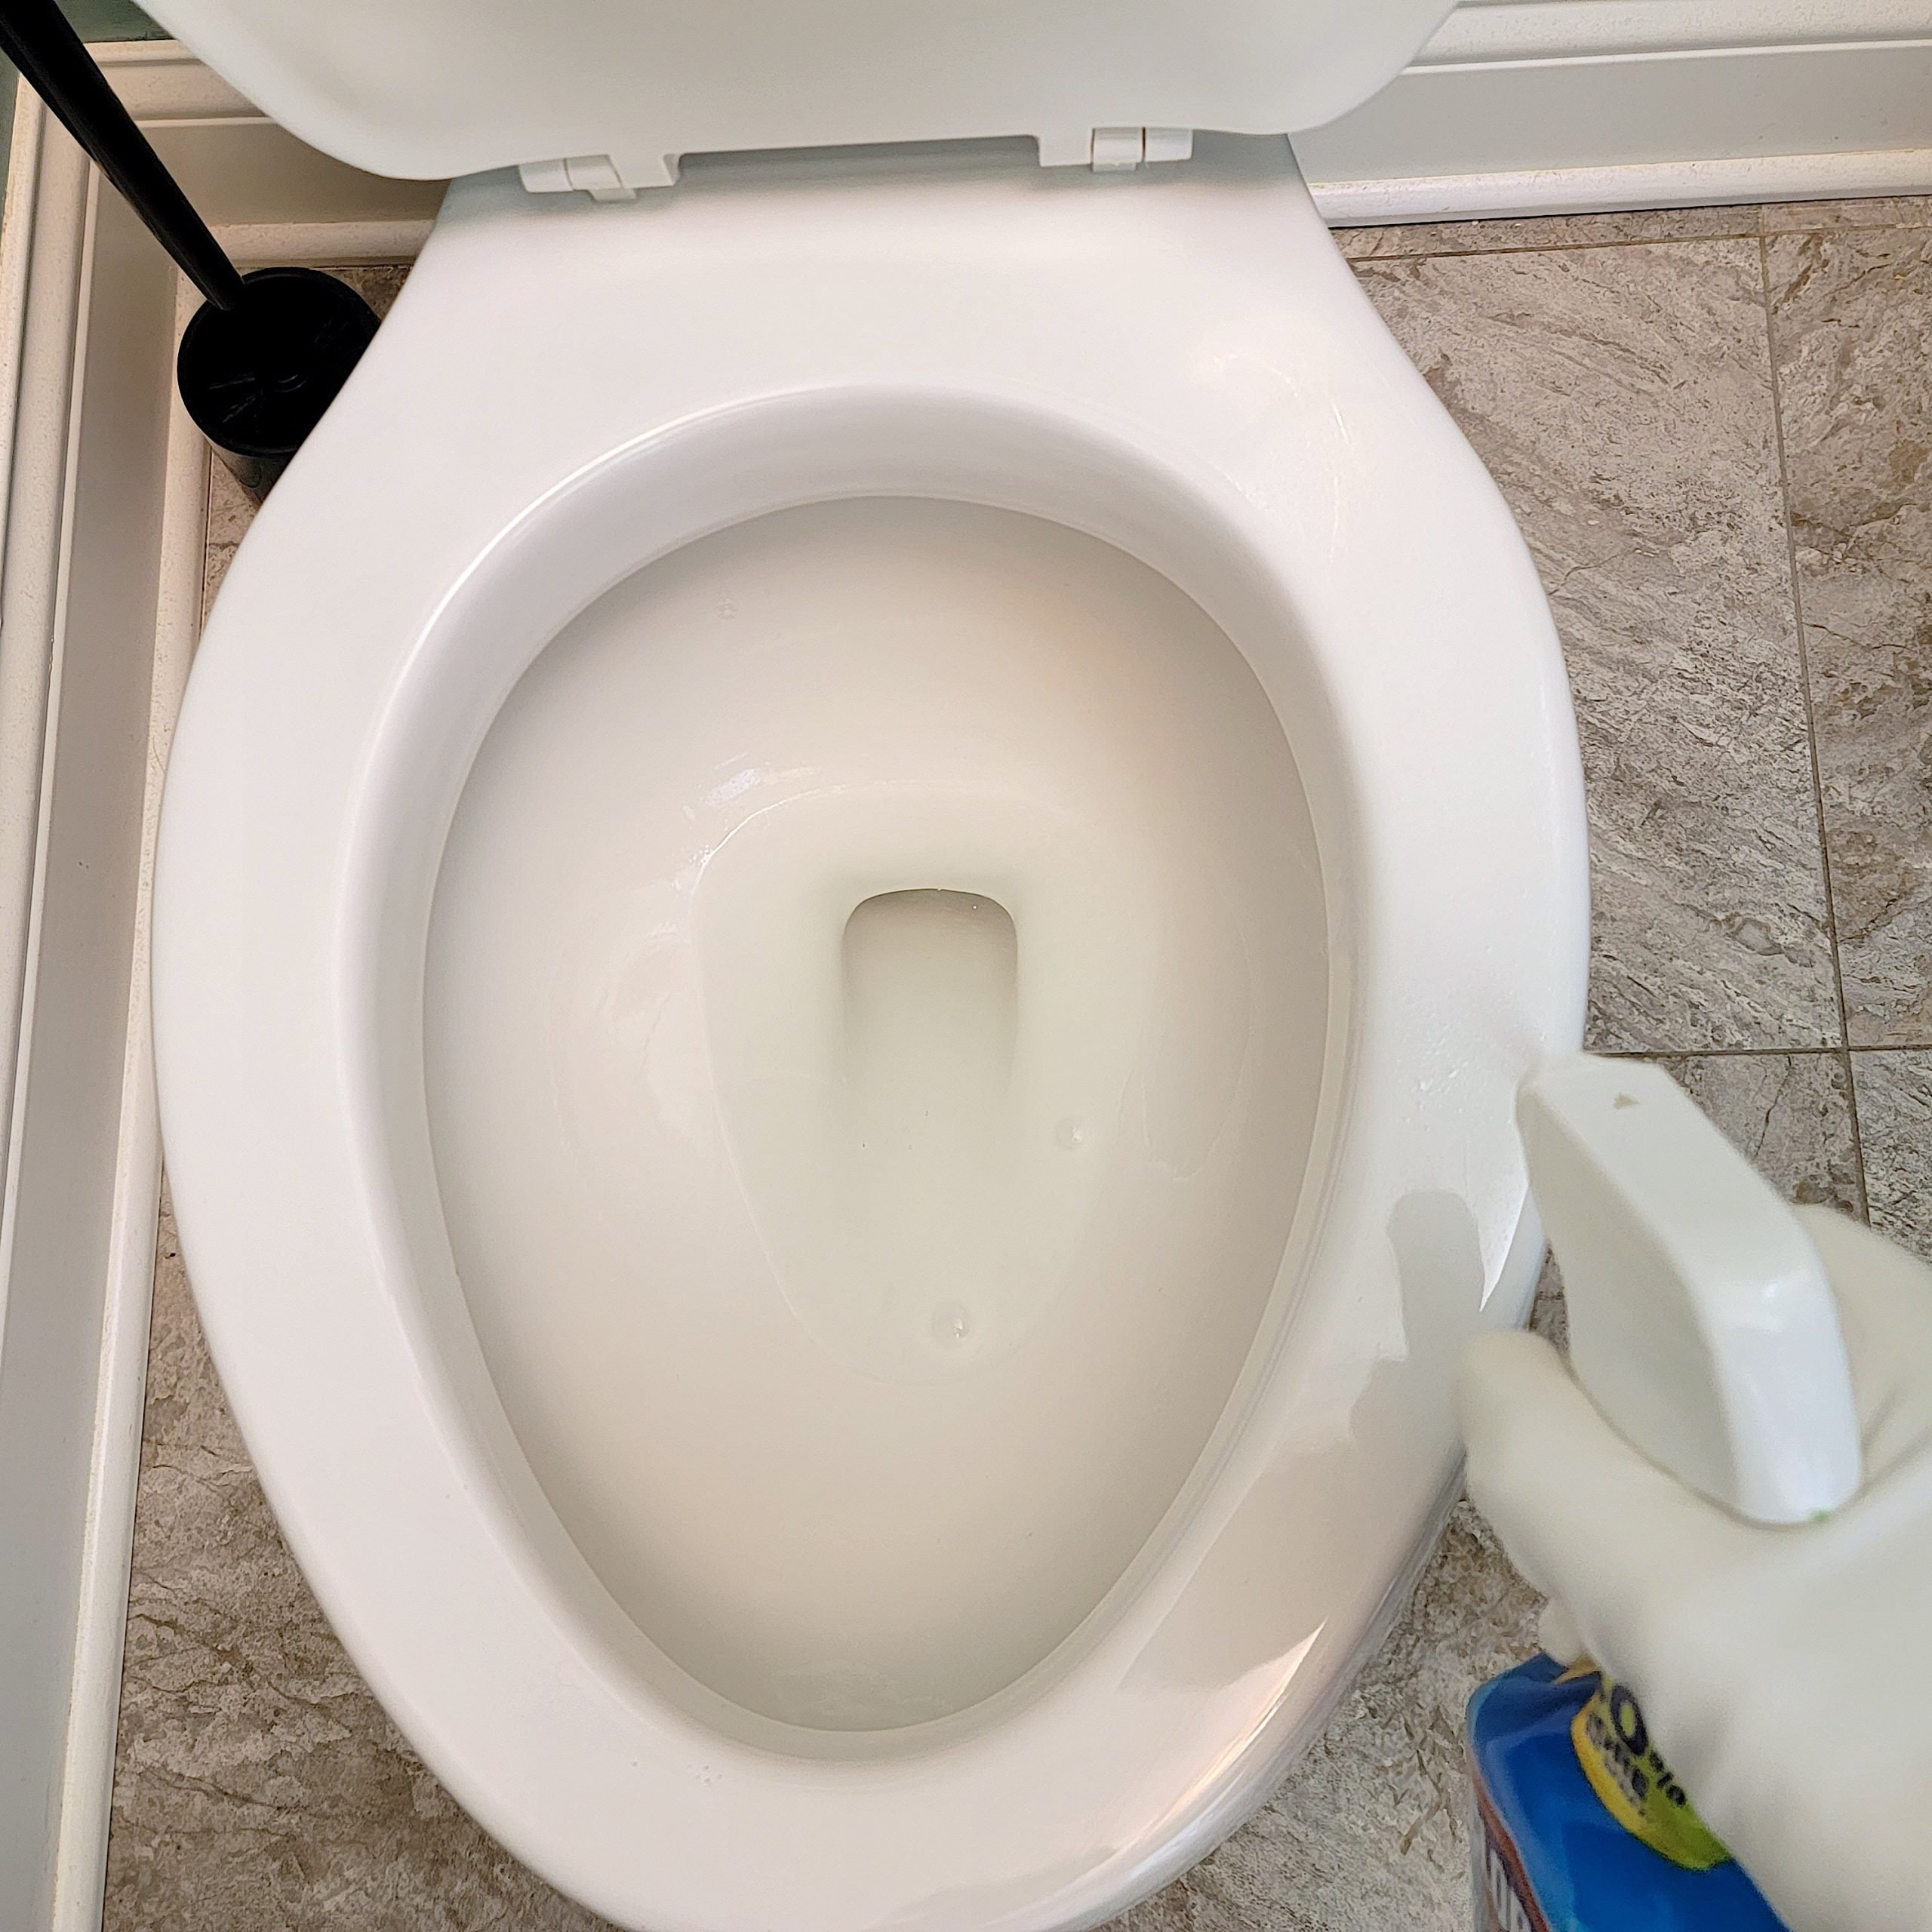 https://www.familyhandyman.com/wp-content/uploads/2021/10/toilet-cleaning-spray_Joe-Cruz-scaled.jpg?fit=640%2C640